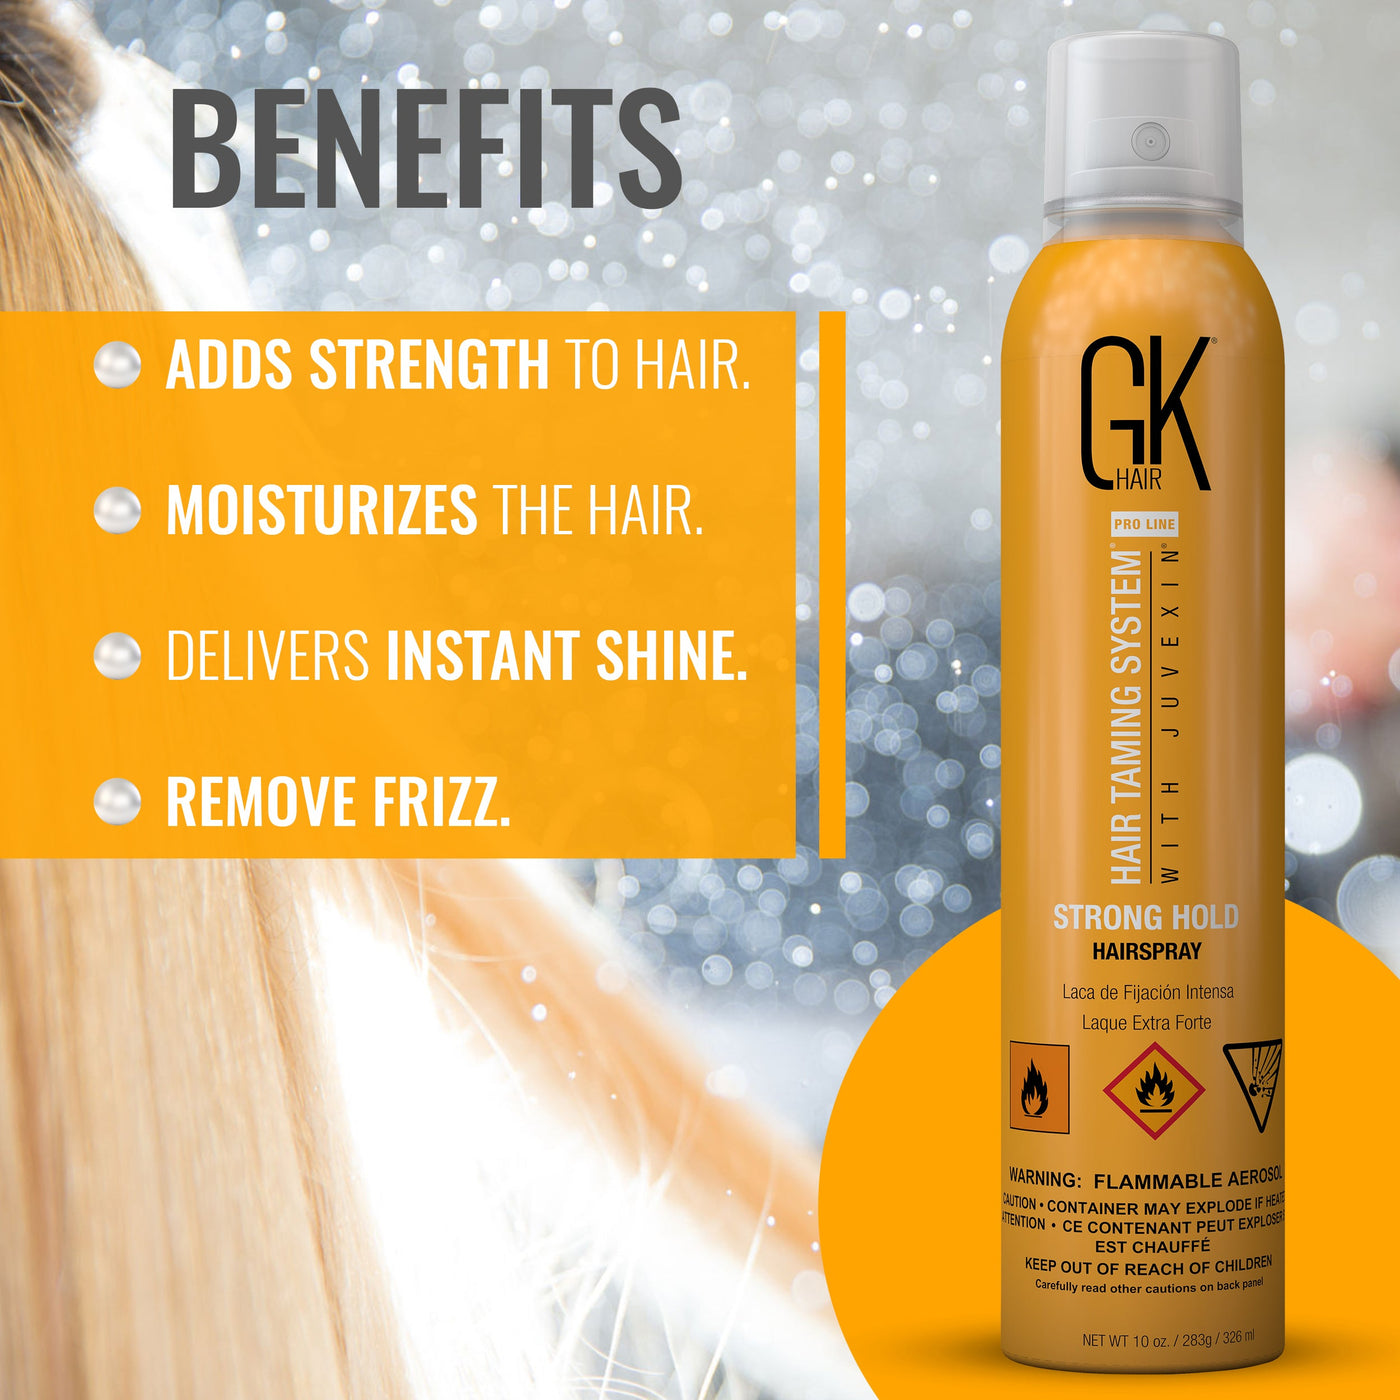 Strong Hold Hair Spray - Benefits moisturizes